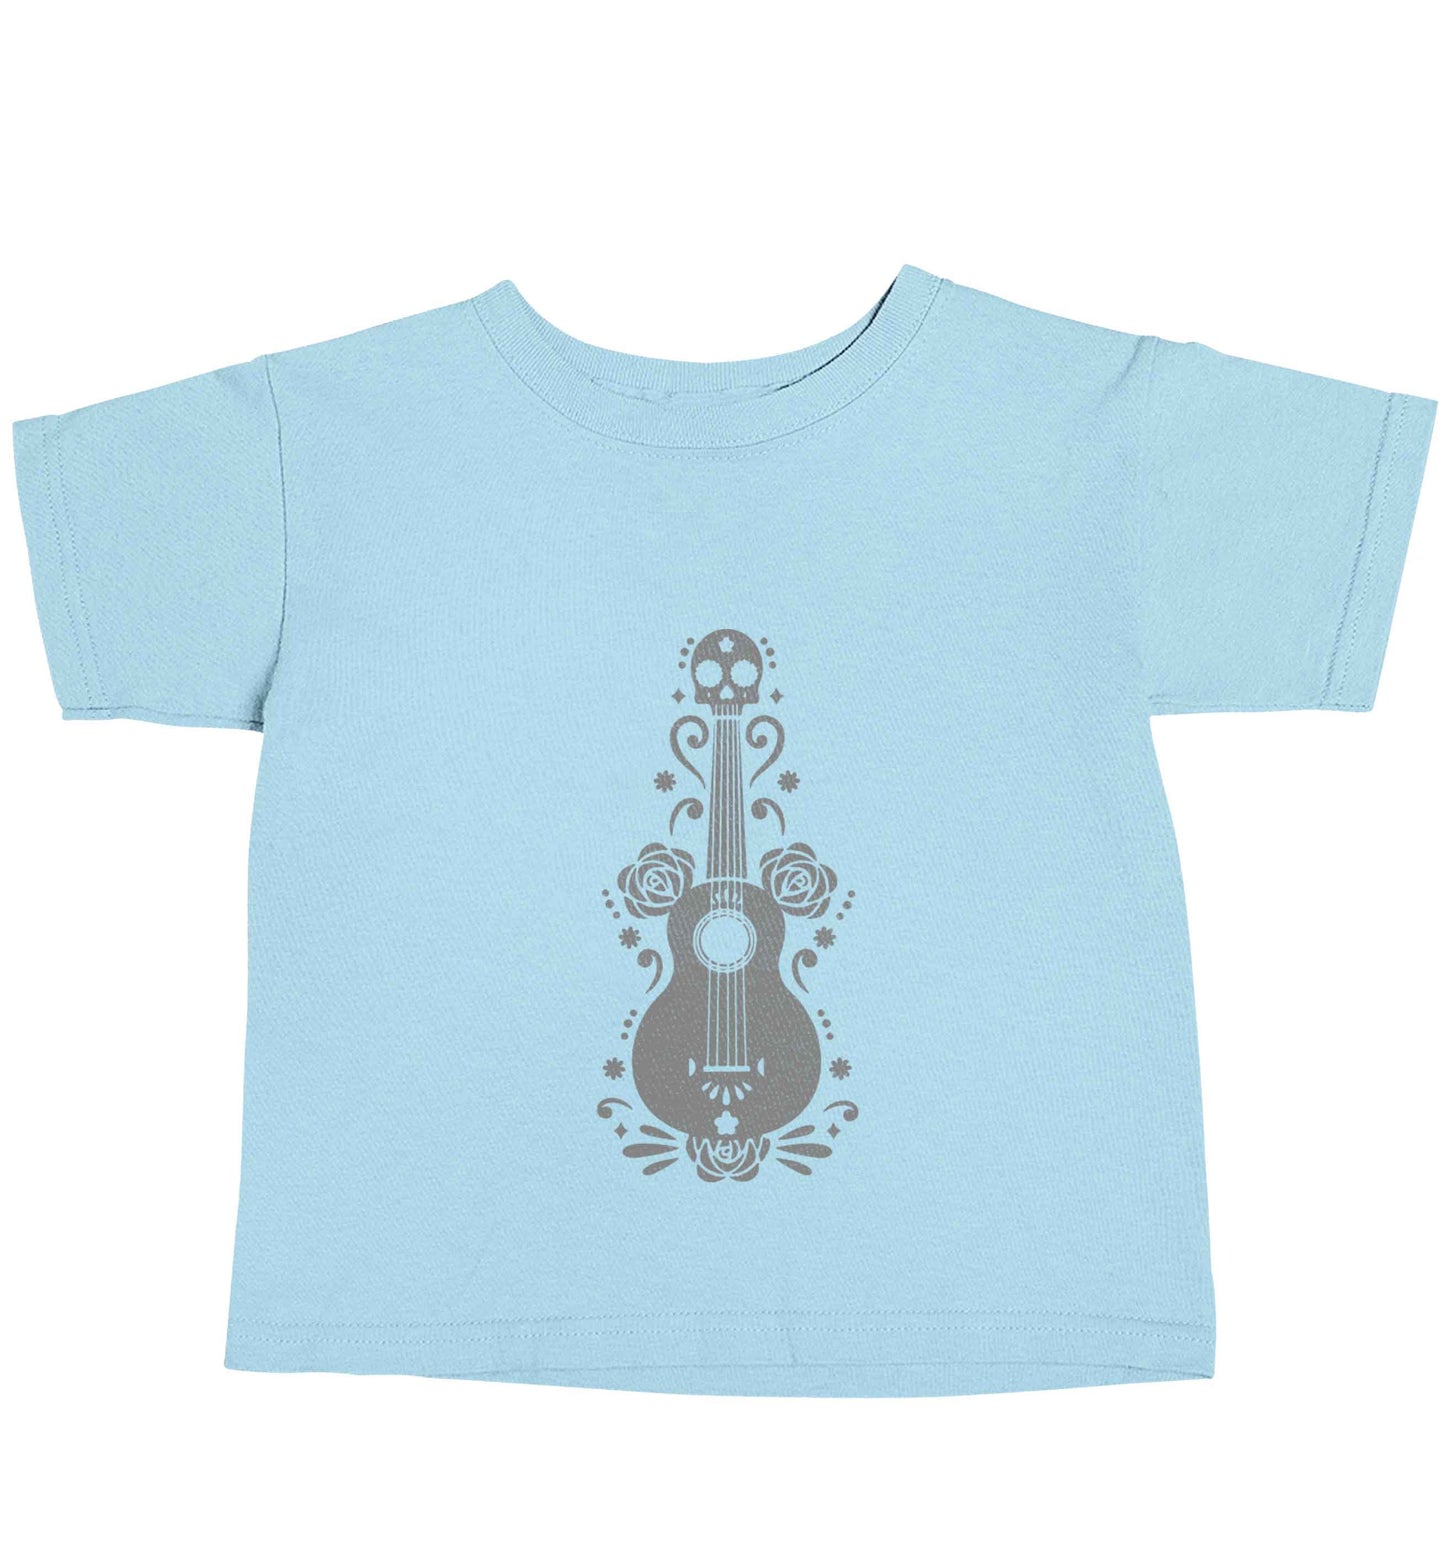 Guitar skull illustration light blue baby toddler Tshirt 2 Years